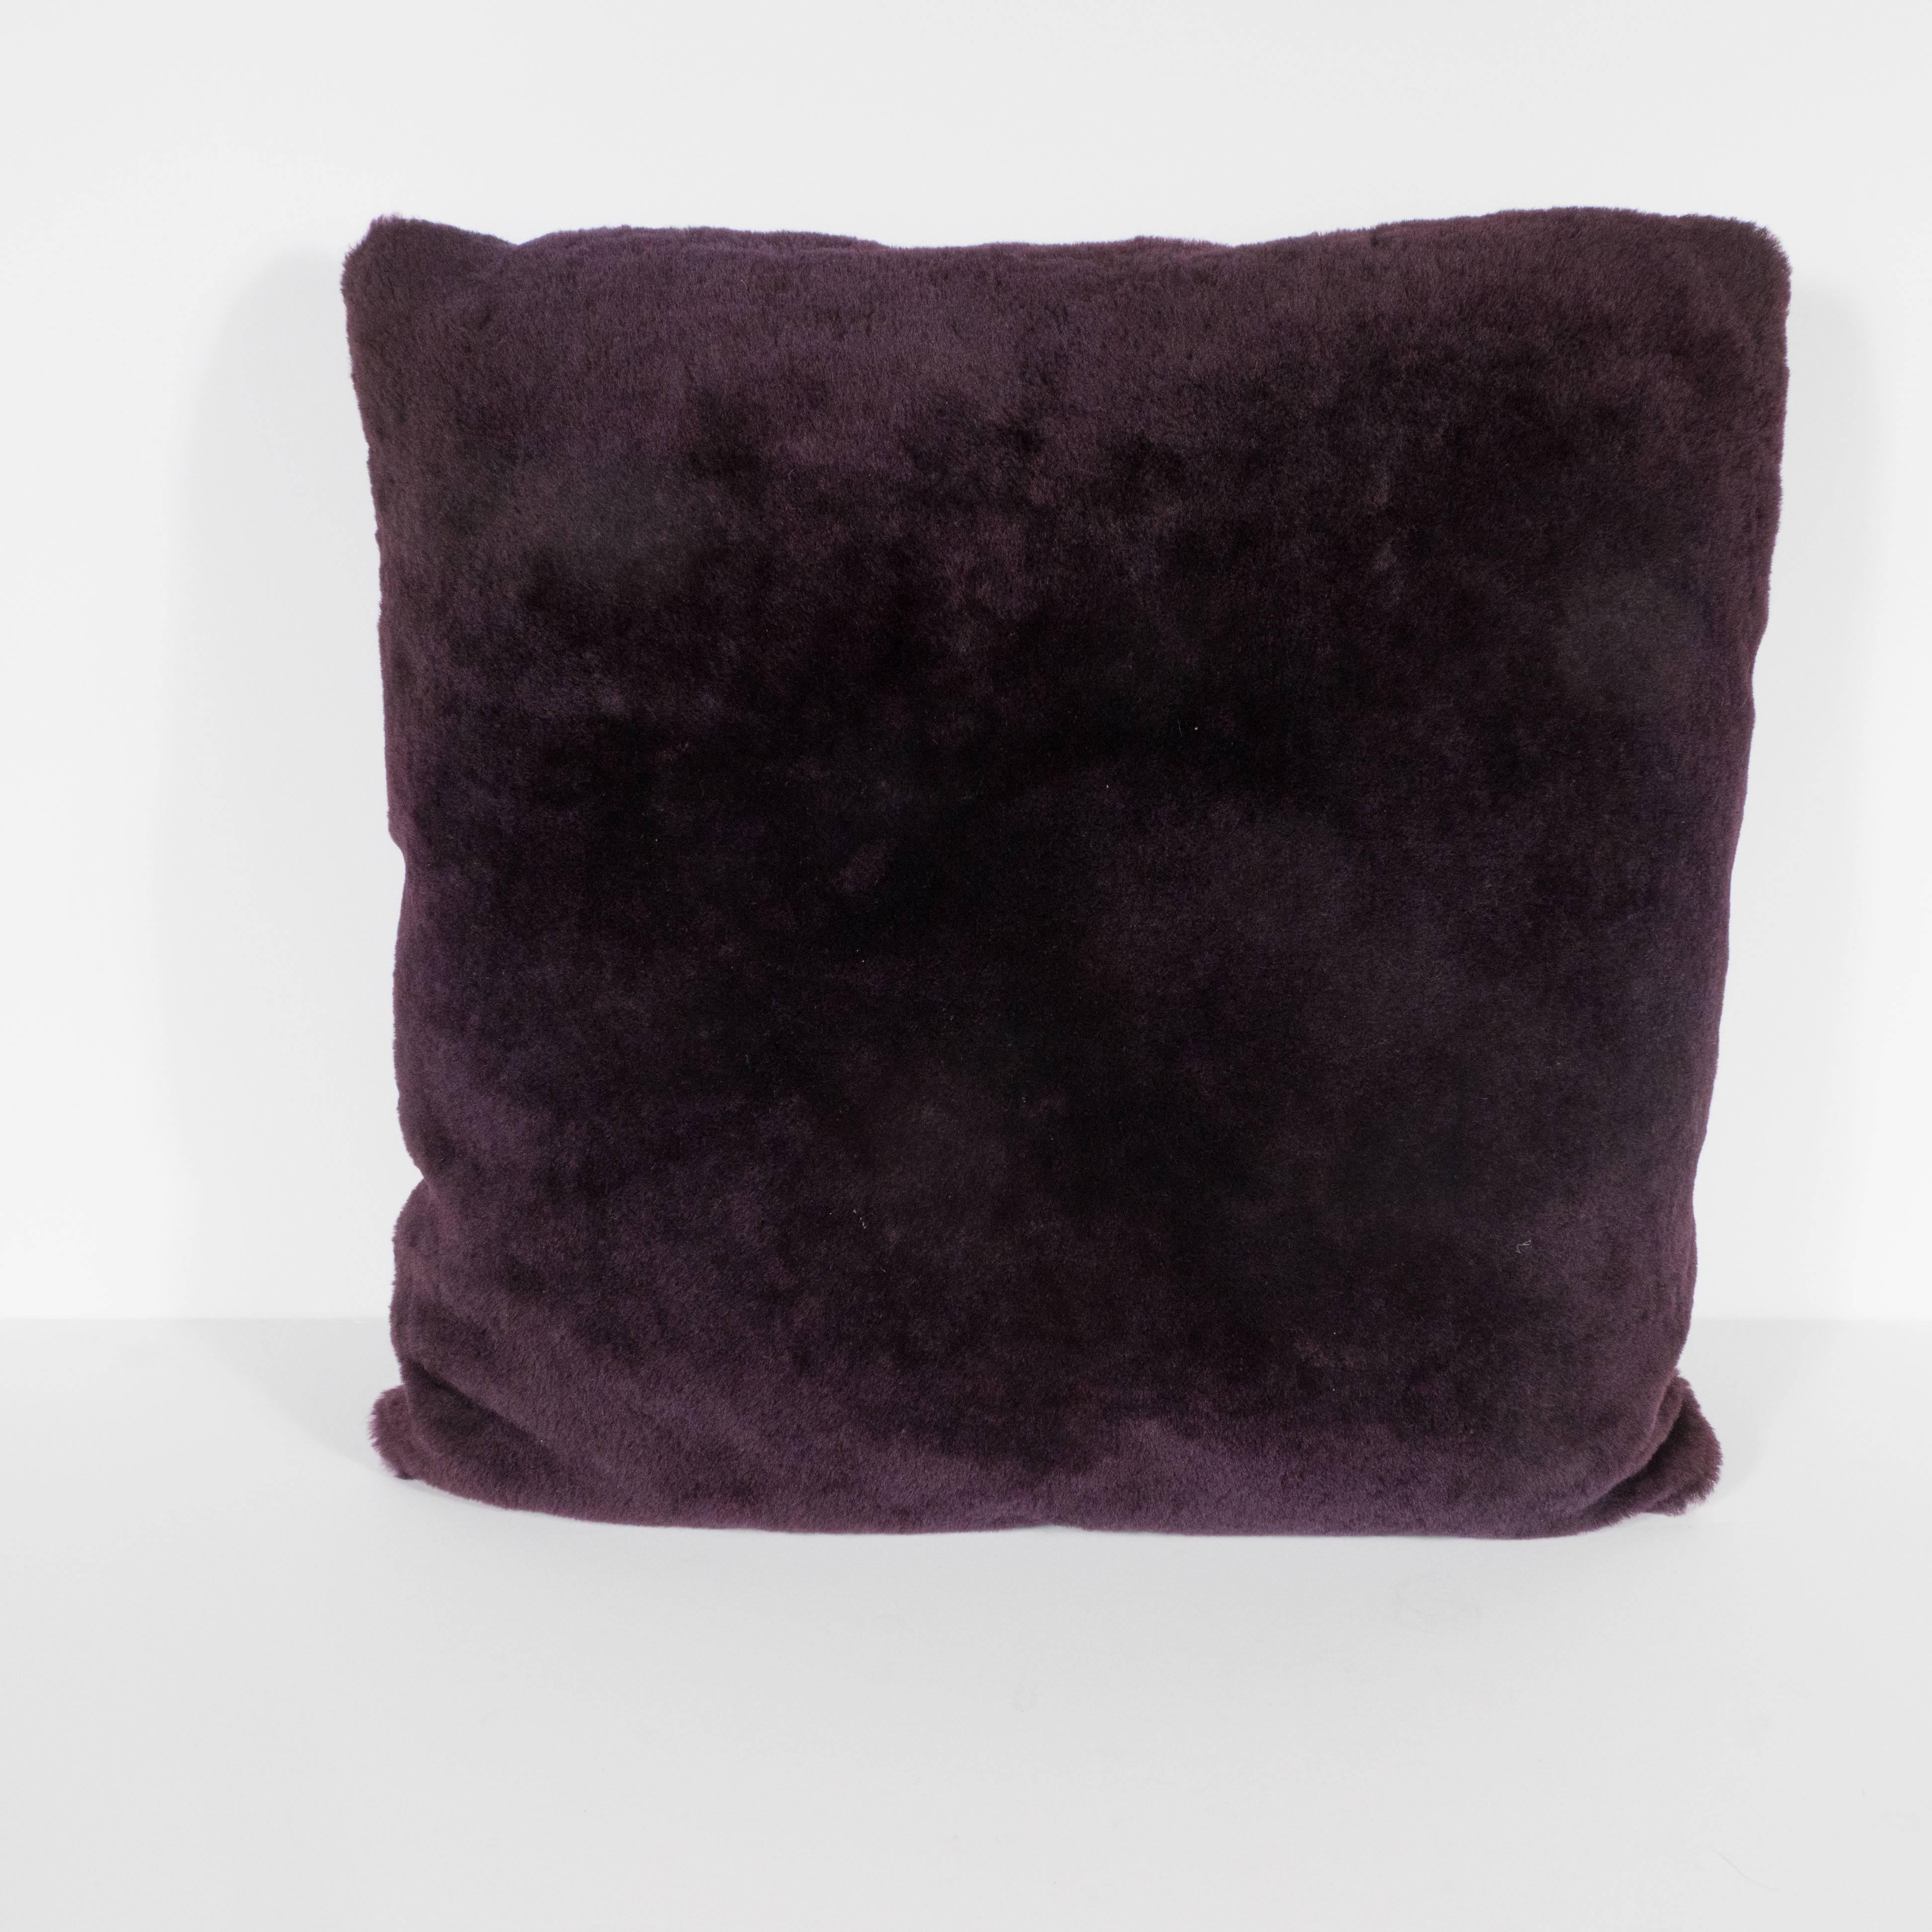 Contemporary Custom Handmade Pillows in Luxe Smoked Amethyst Loro Piana Cashmere